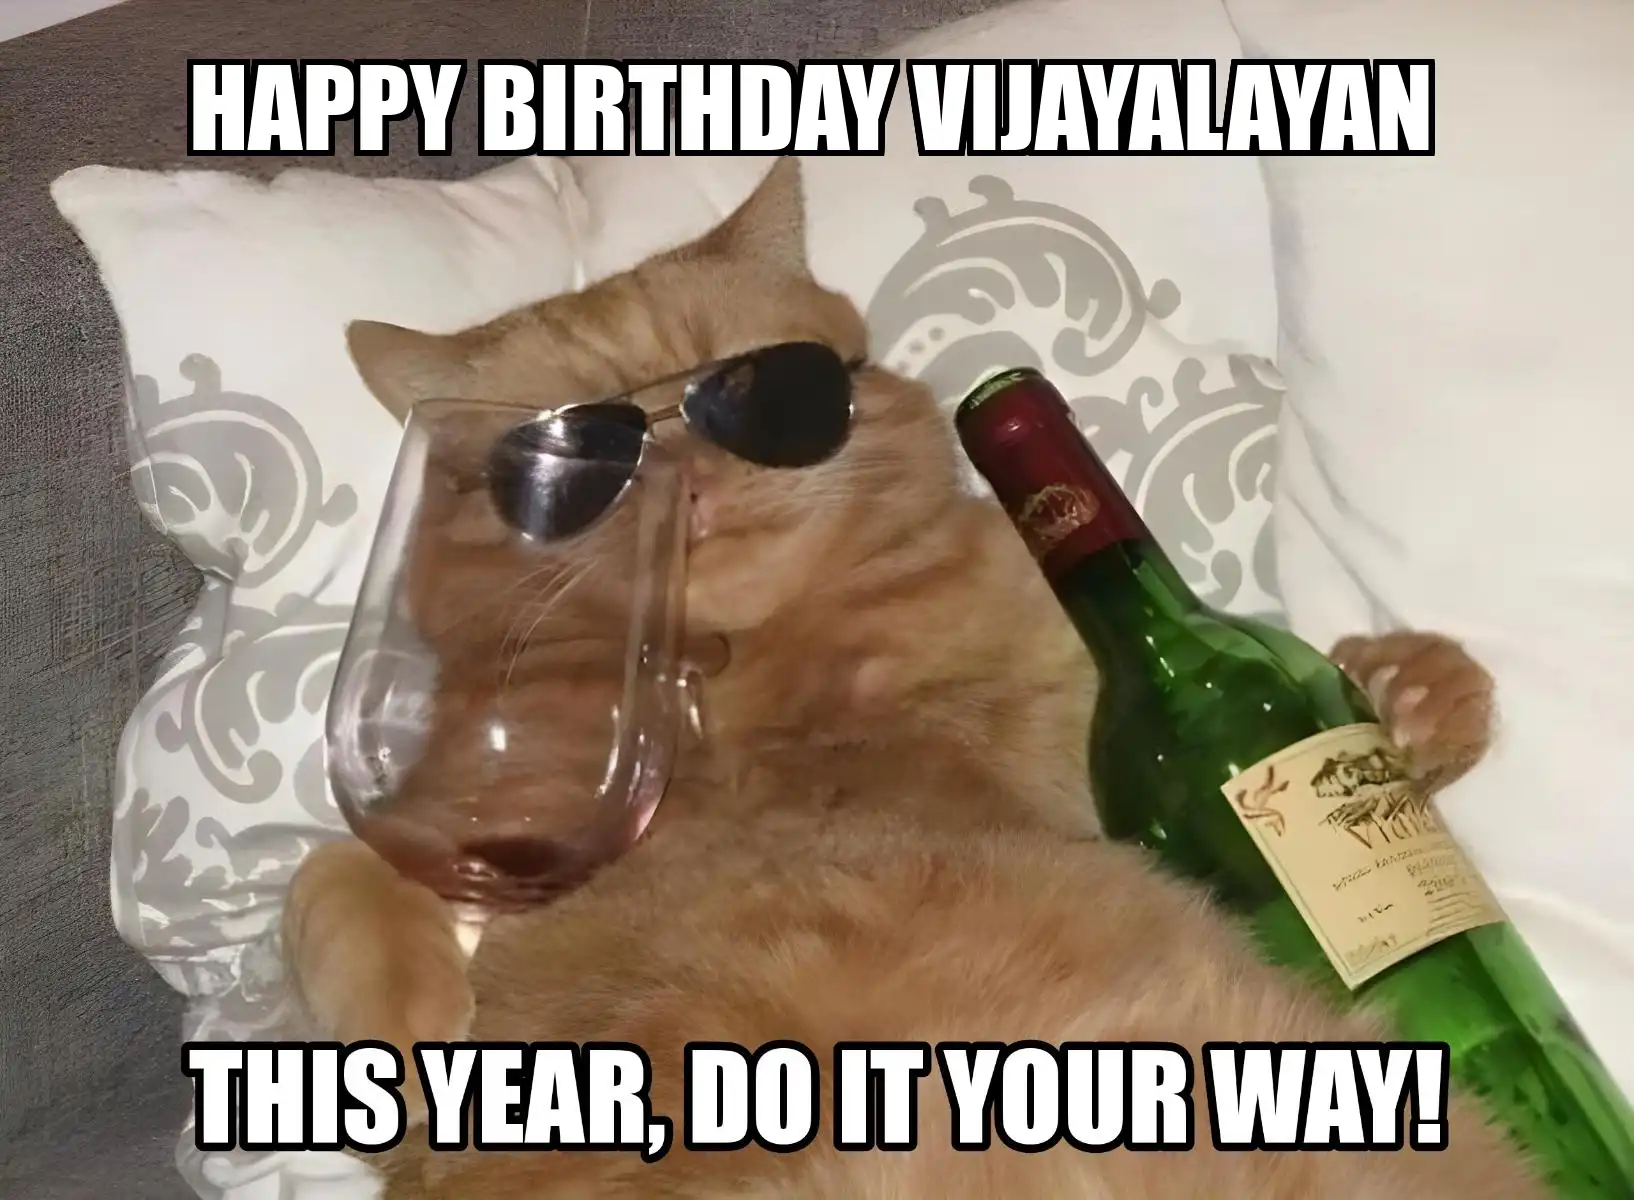 Happy Birthday Vijayalayan This Year Do It Your Way Meme